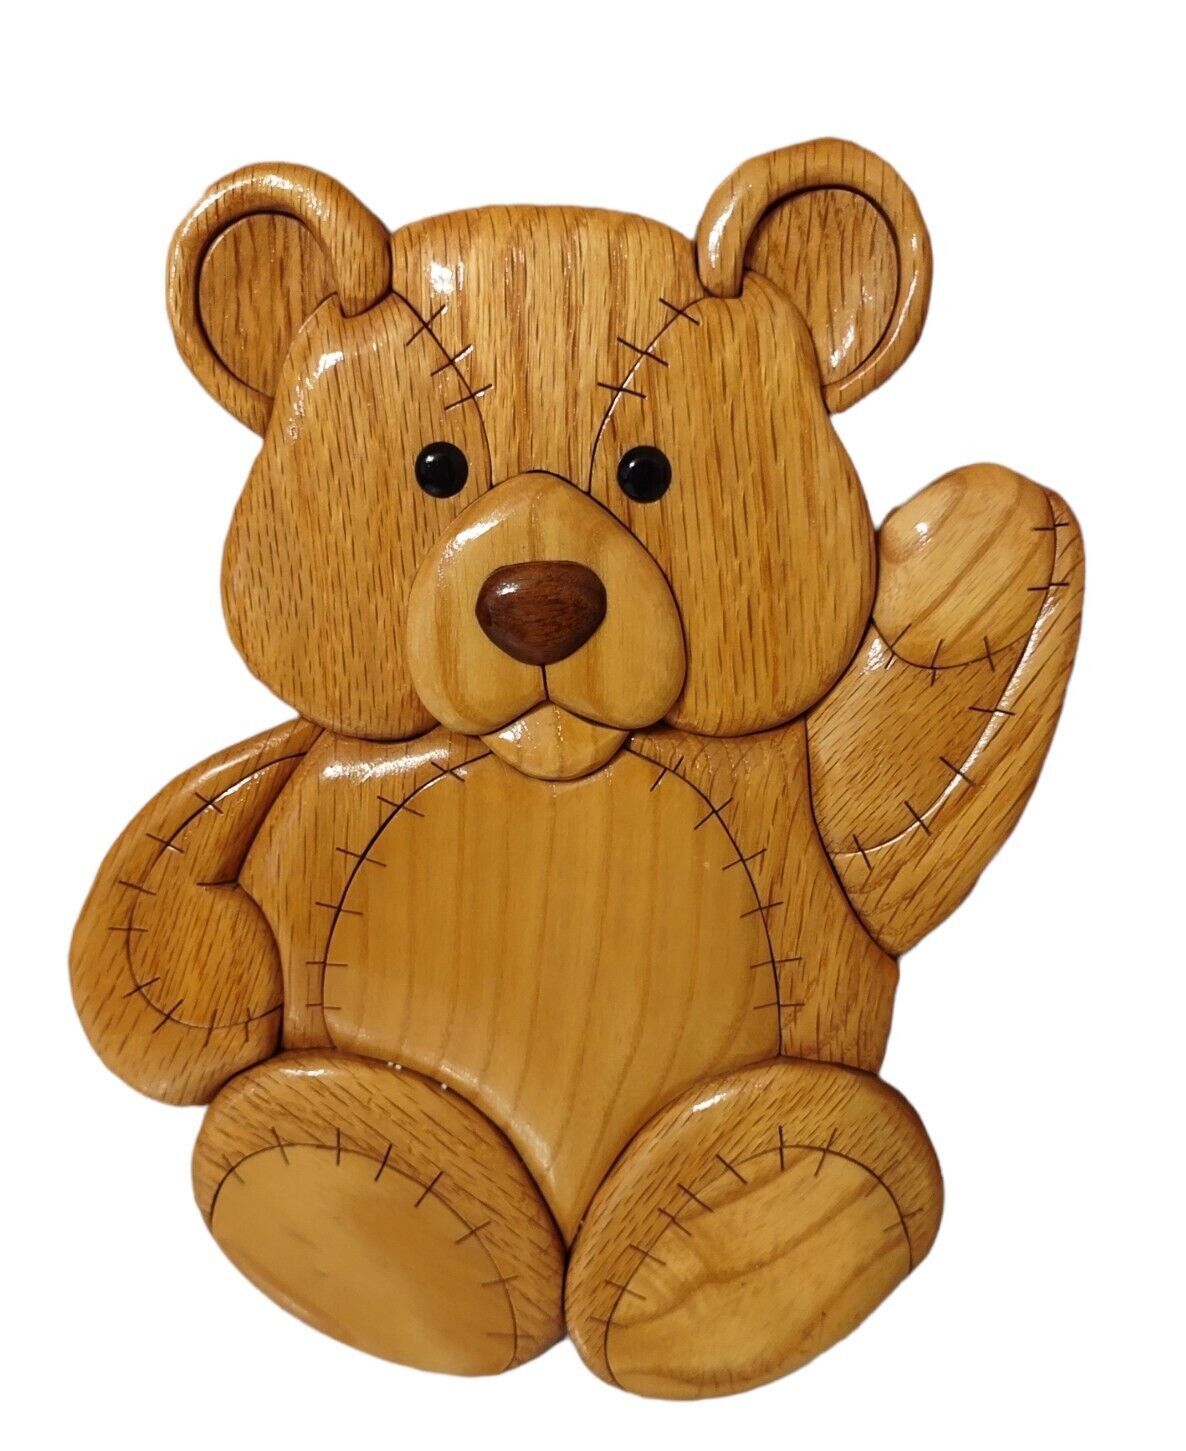 Intarsia Wooden Wall Hanging Teddy Bear Nursery Baby Decor